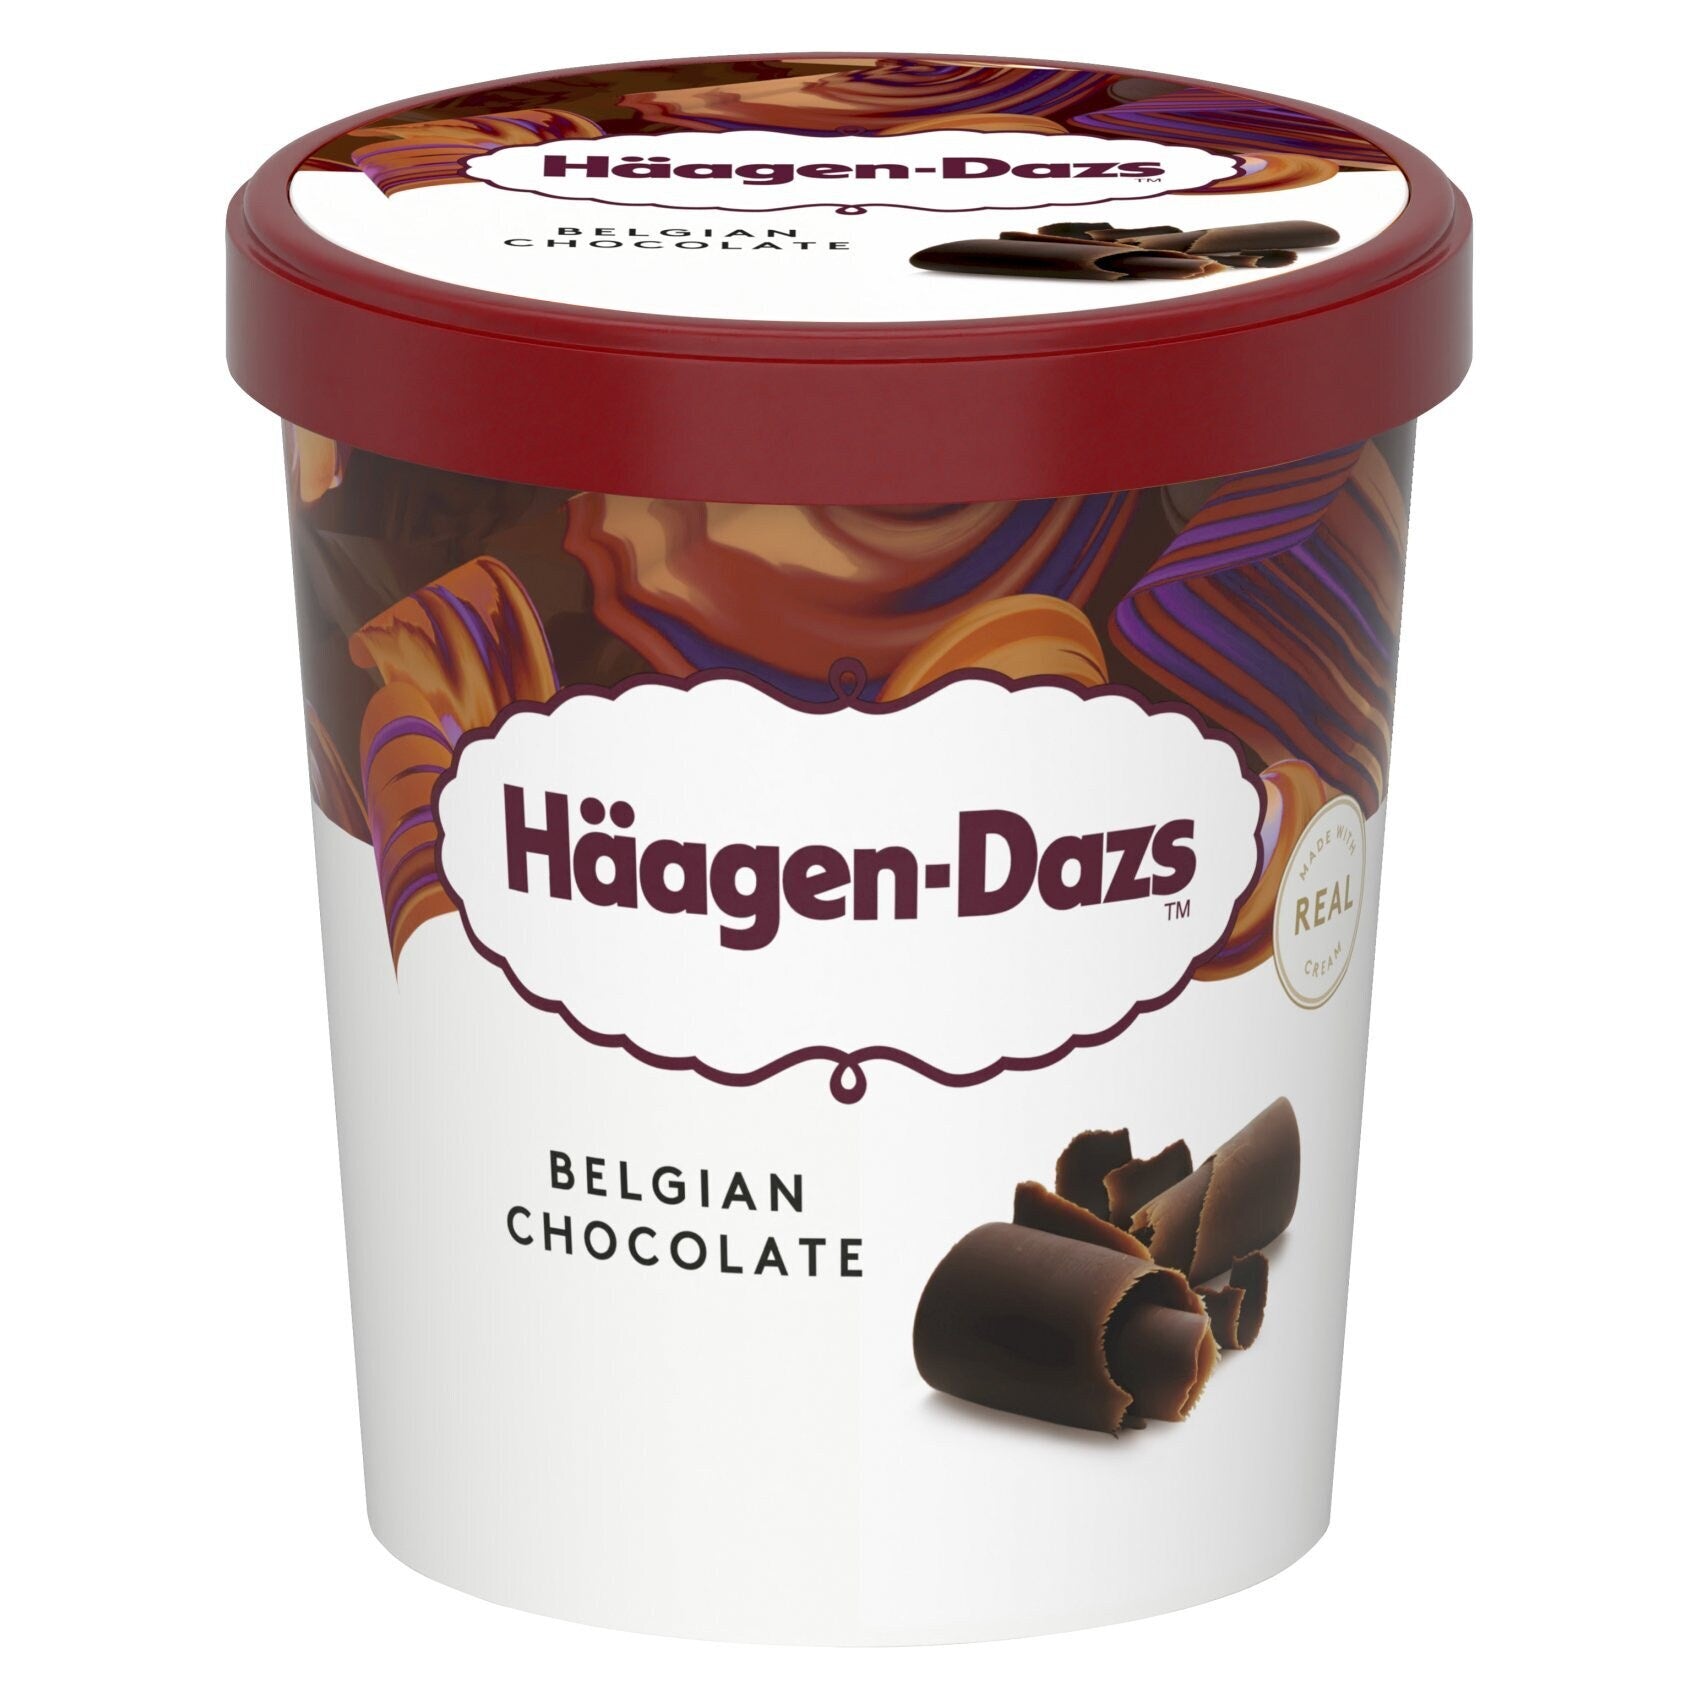 HaagnDaz IceCrm Choco 946ml